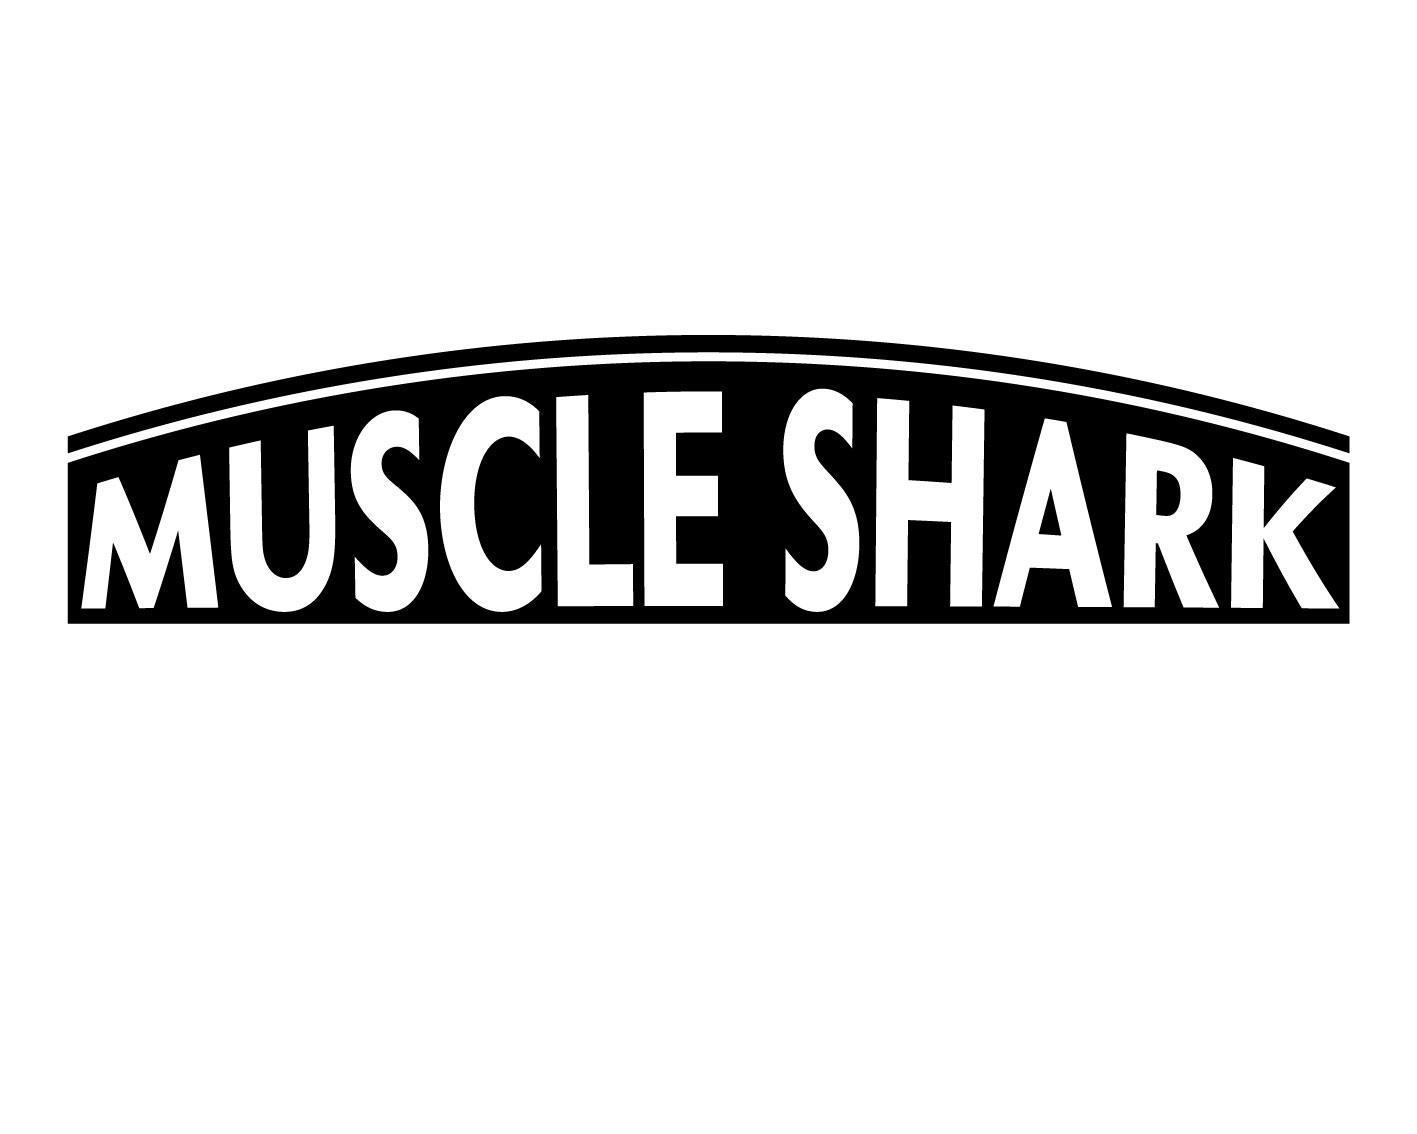 MUSCLE SHARK